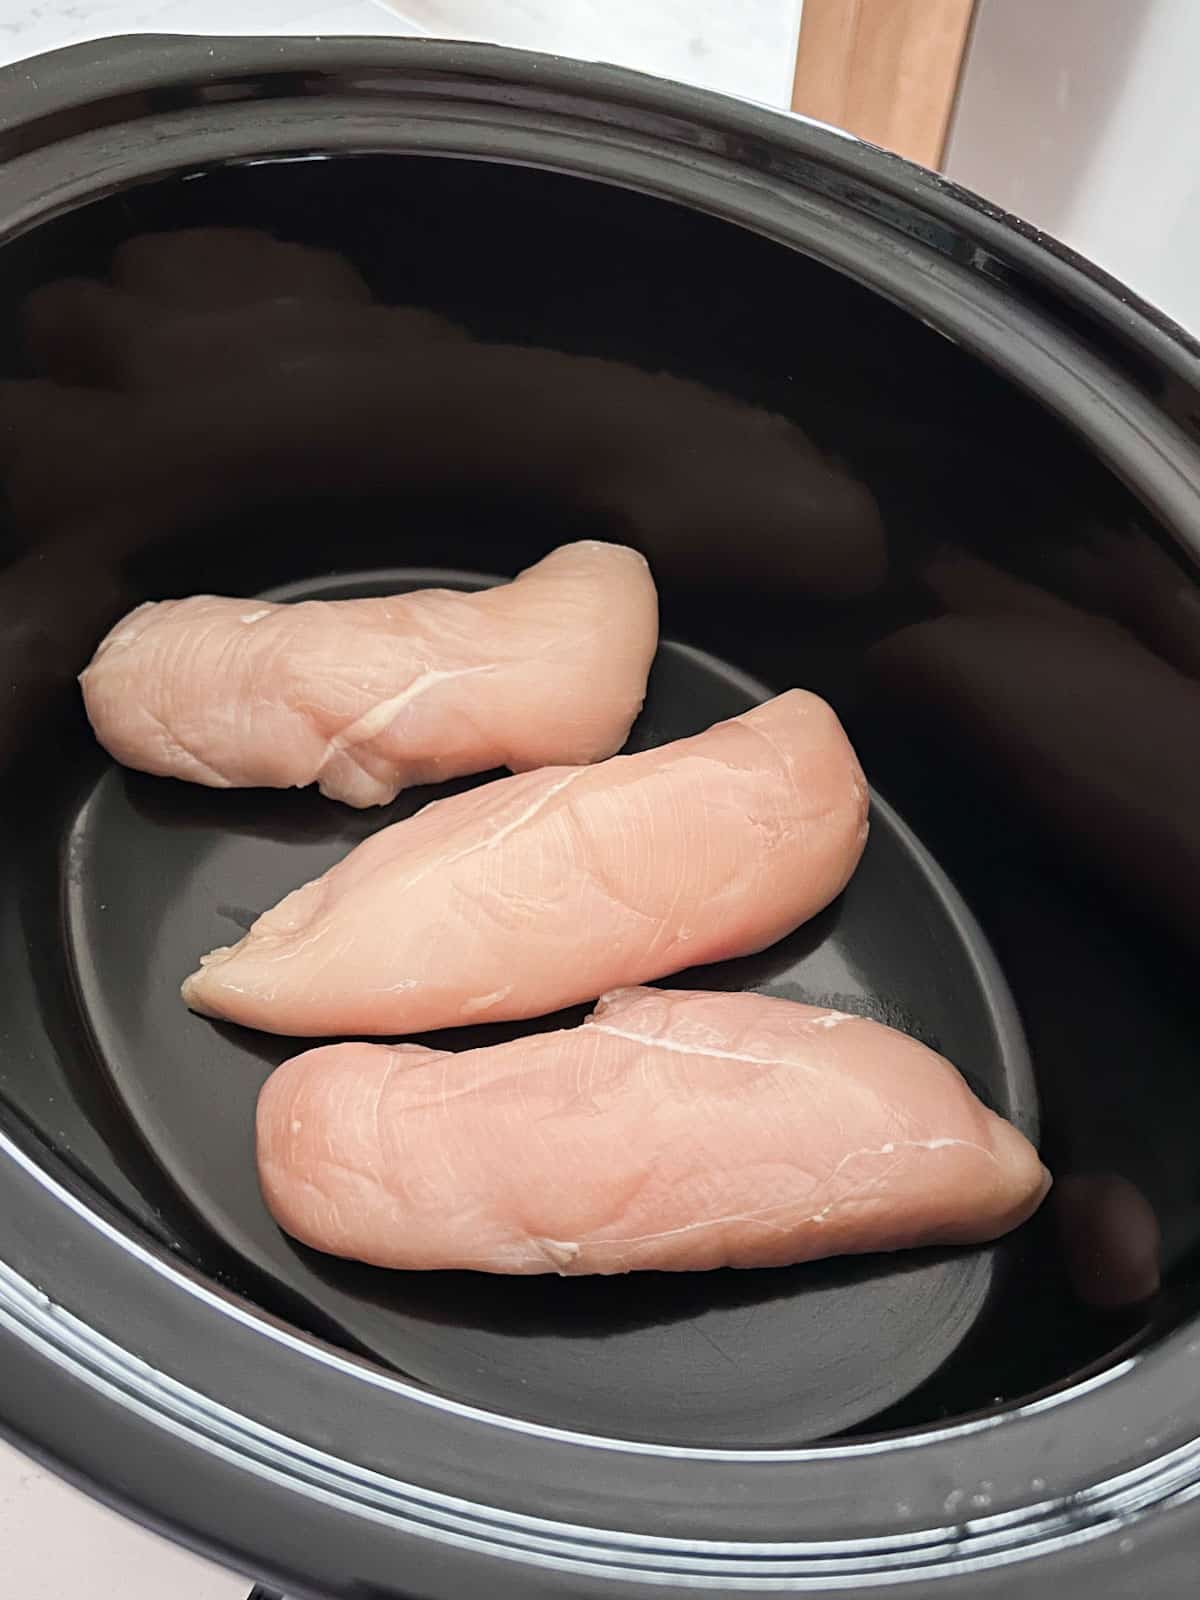 3 raw chicken breasts in a crockpot.